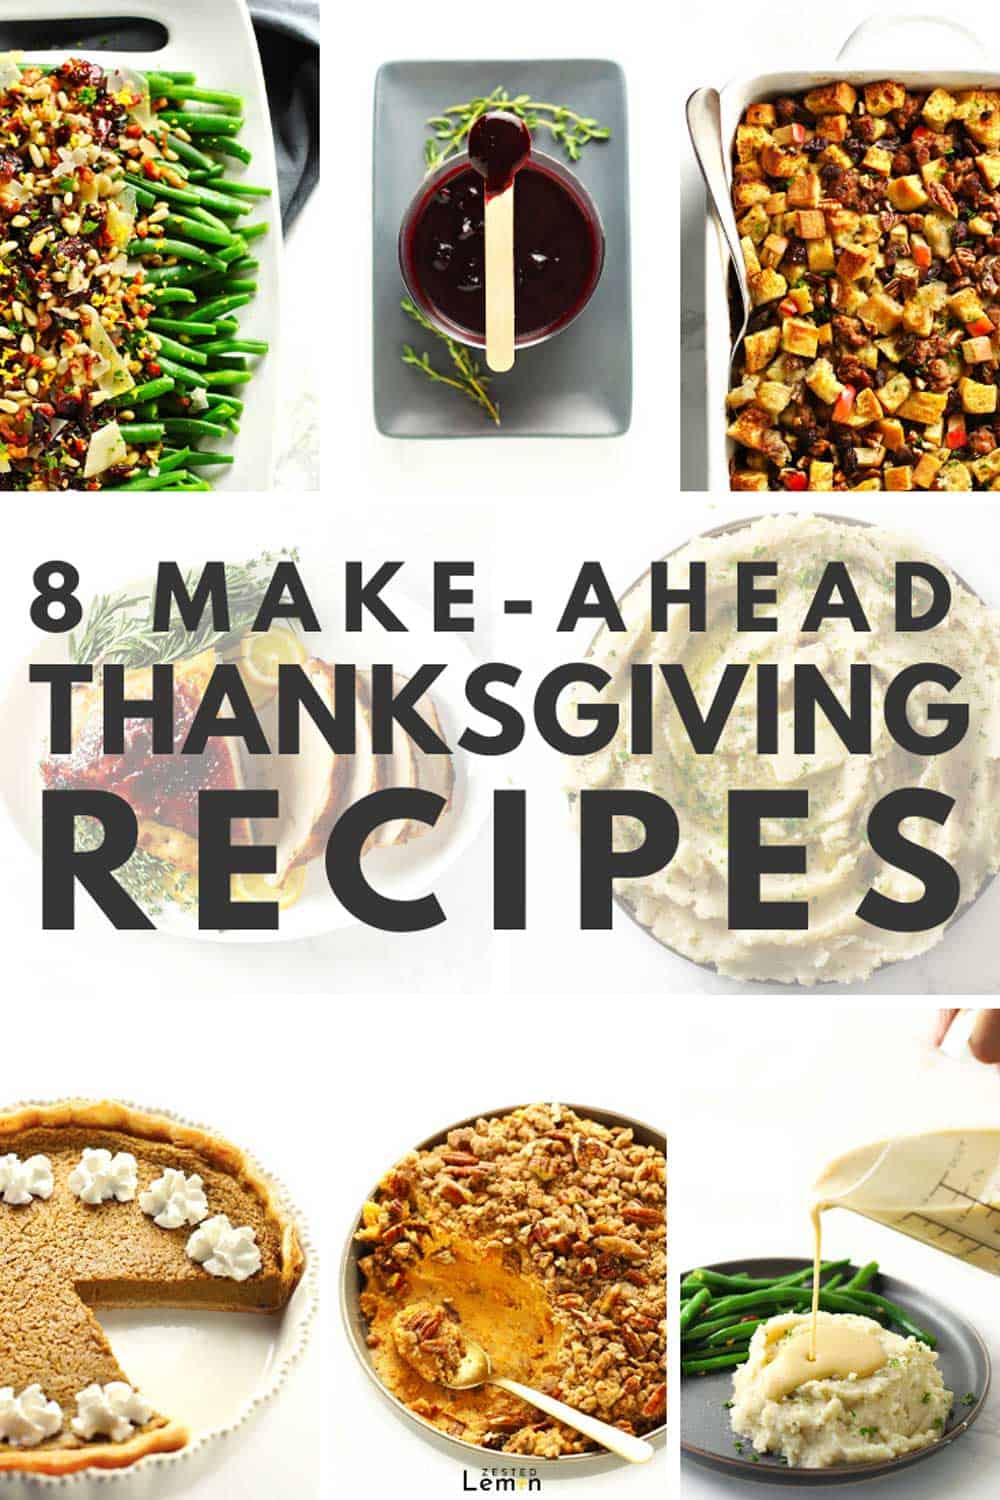 Make-Ahead Thanksgiving Recipes - Zested Lemon